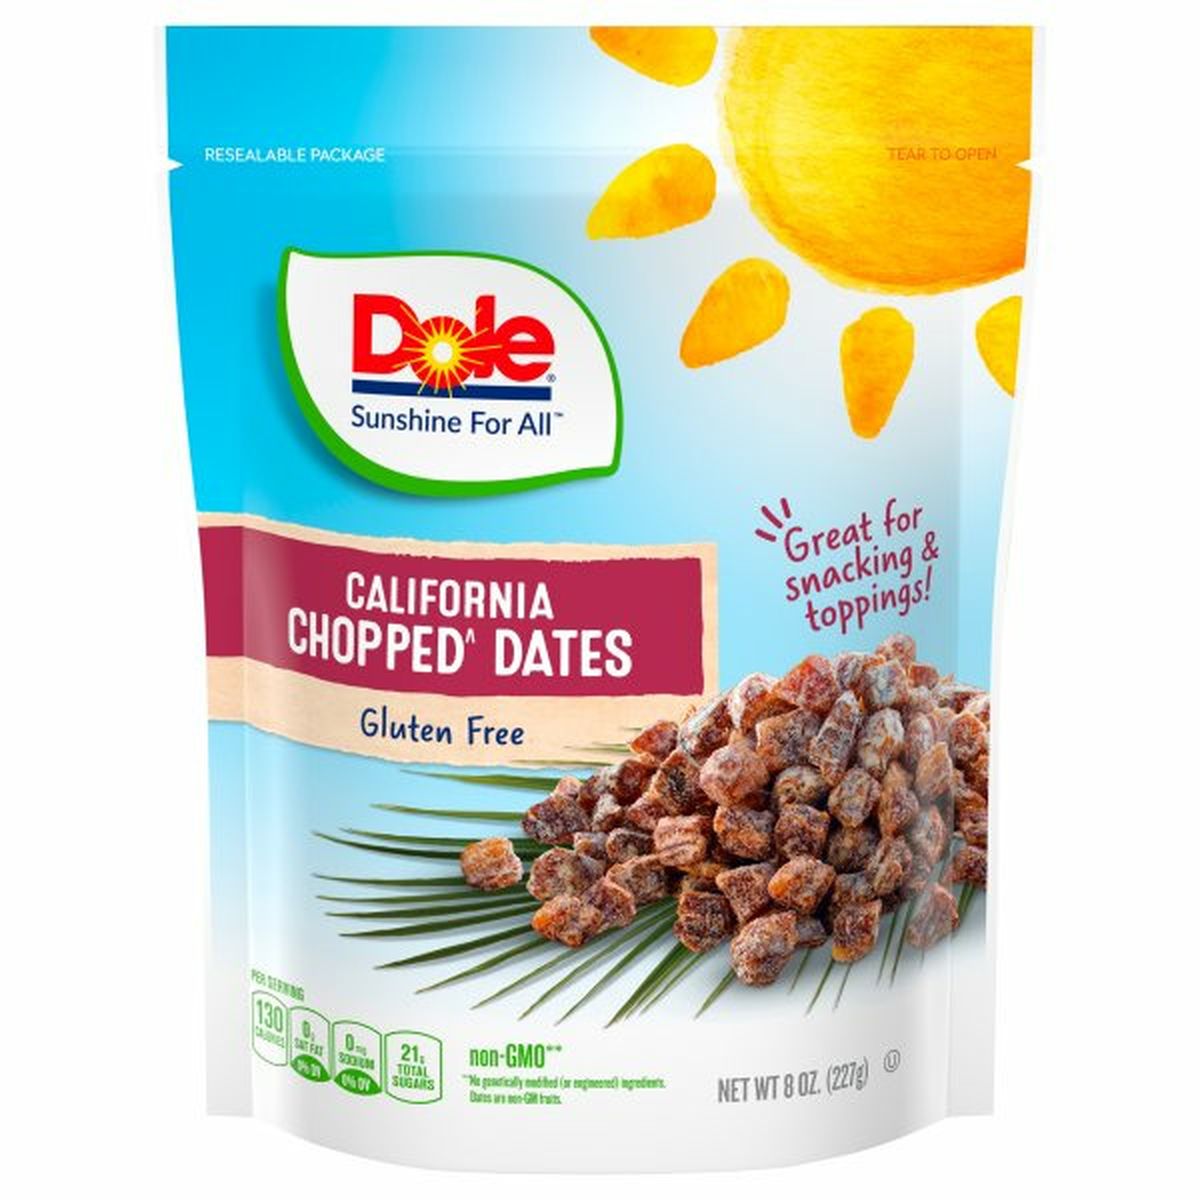 Calories in Dole Dates, Chopped, California